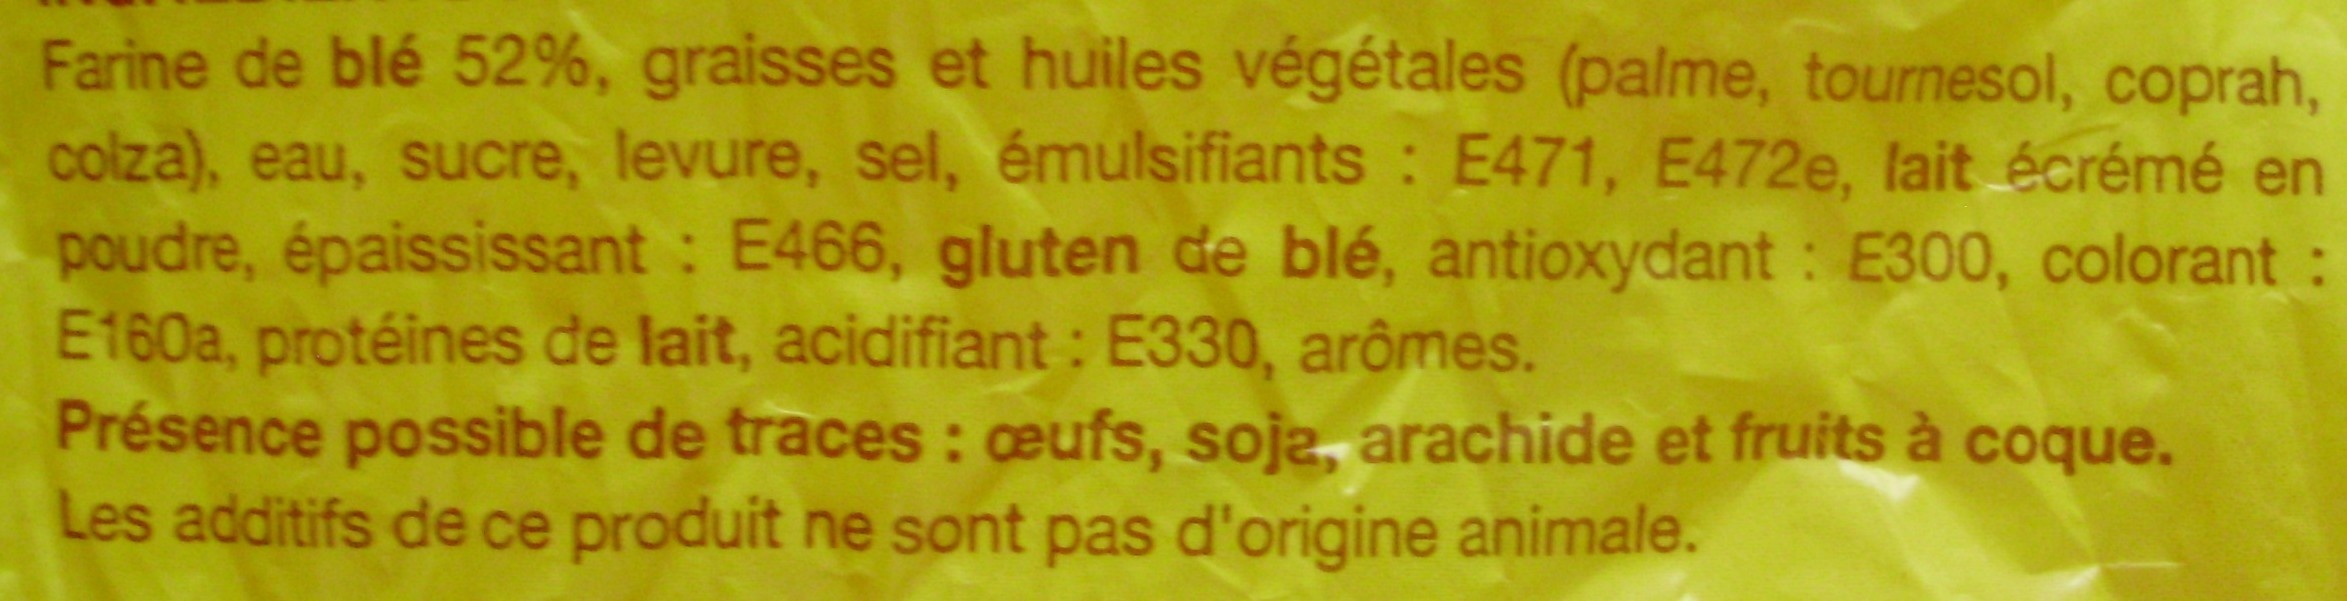 10 croissants - Ingredients - fr